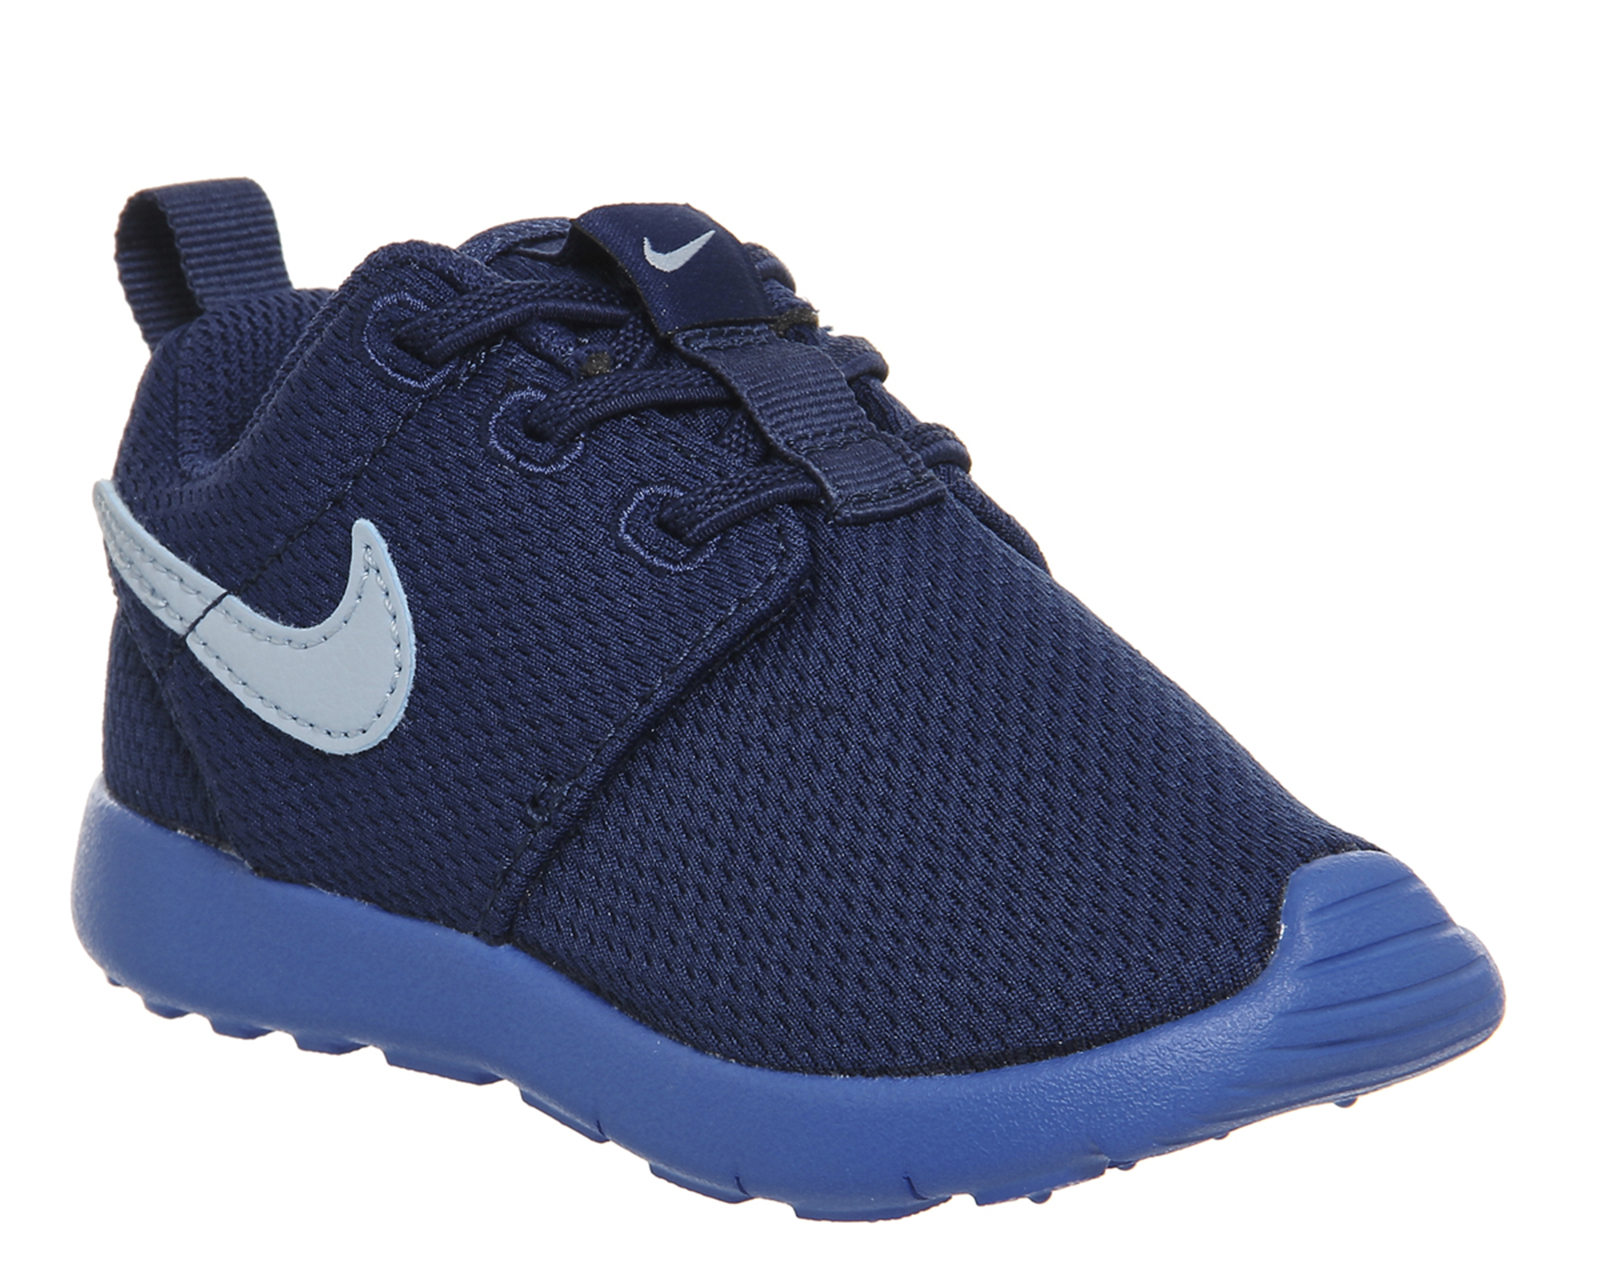 NikeRoshe Run TdCoastal Blue Grey Hyper Cobalt